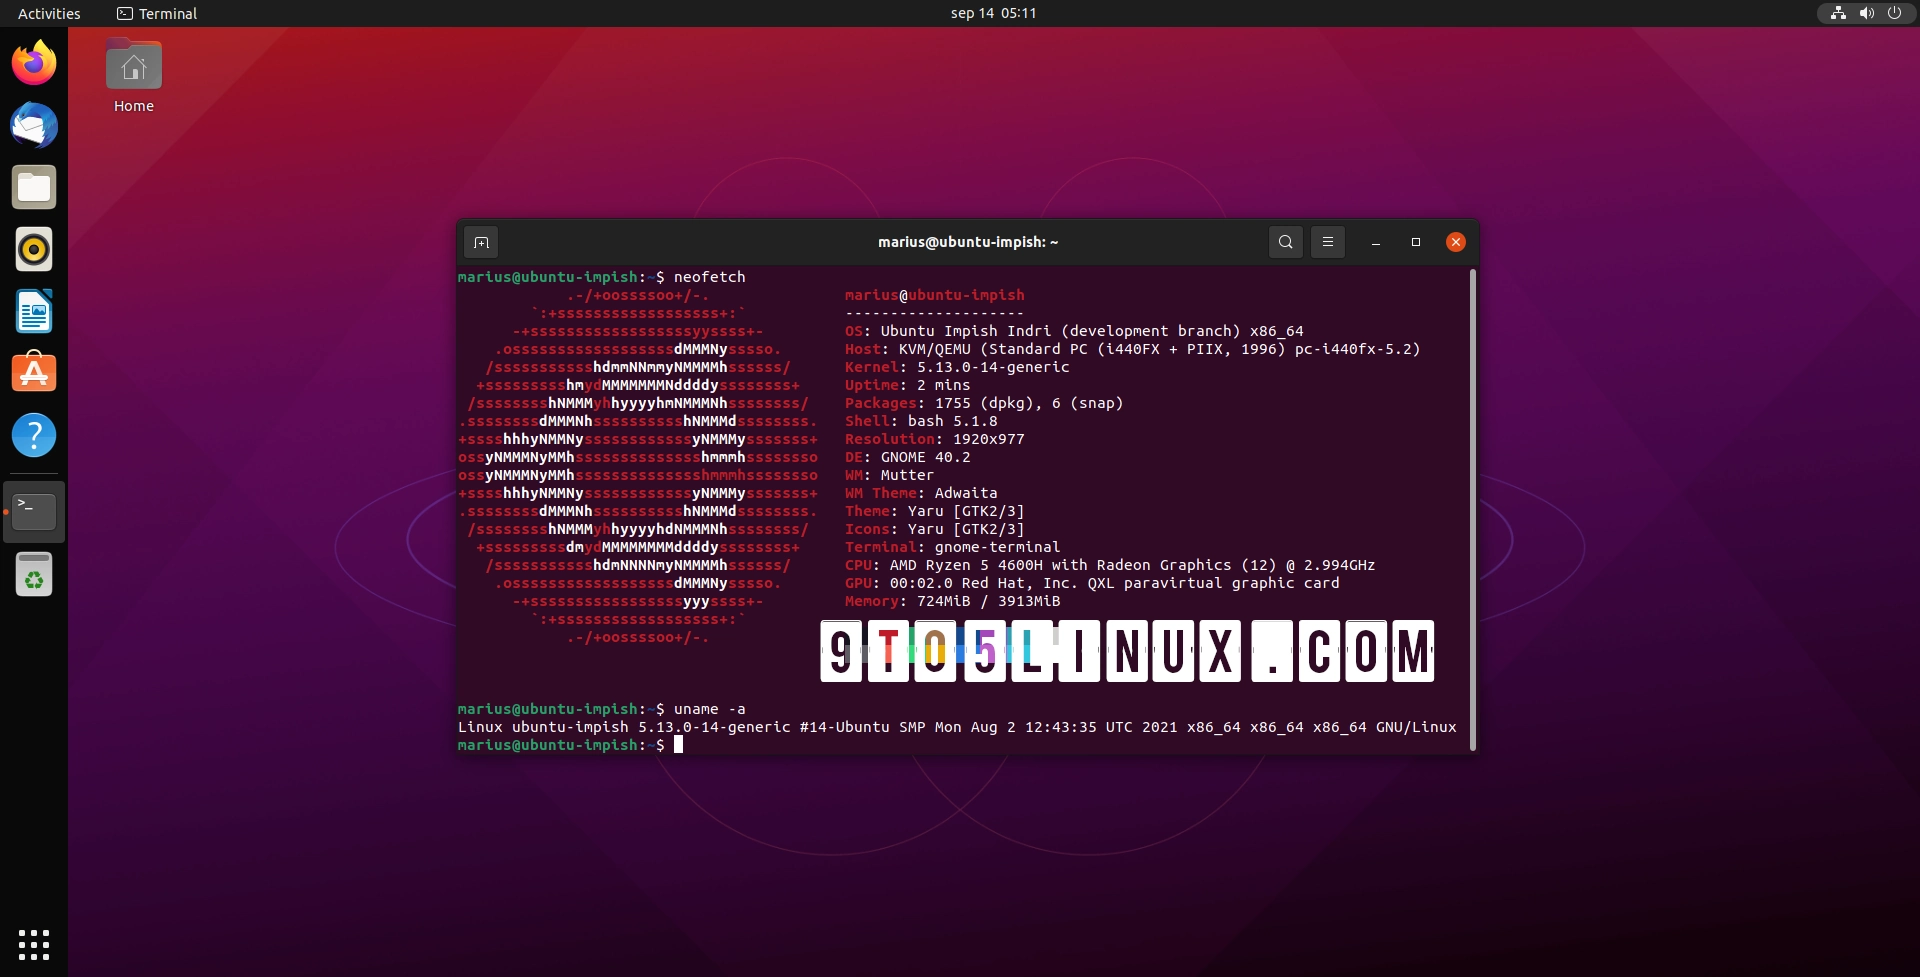 Looks Like Ubuntu 21.10 (Impish Indri) Will Be Powered by Linux Kernel 5.13